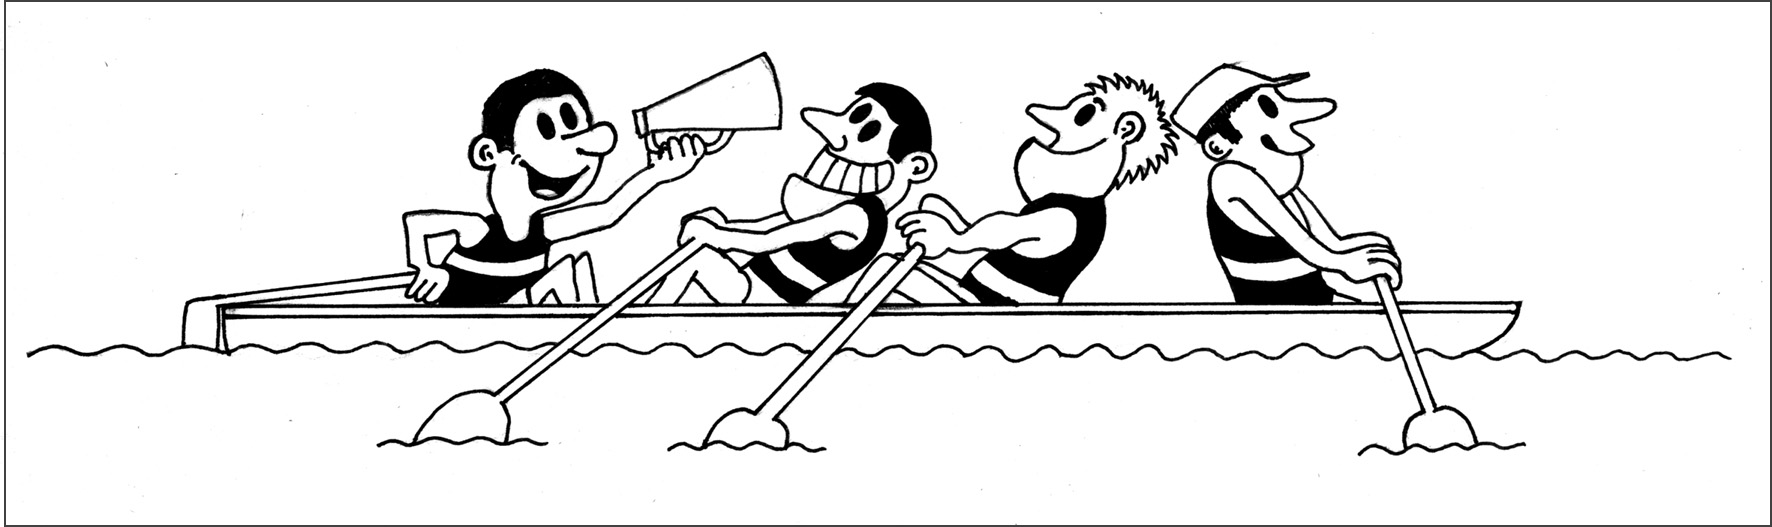 The Boat Race Cartoon